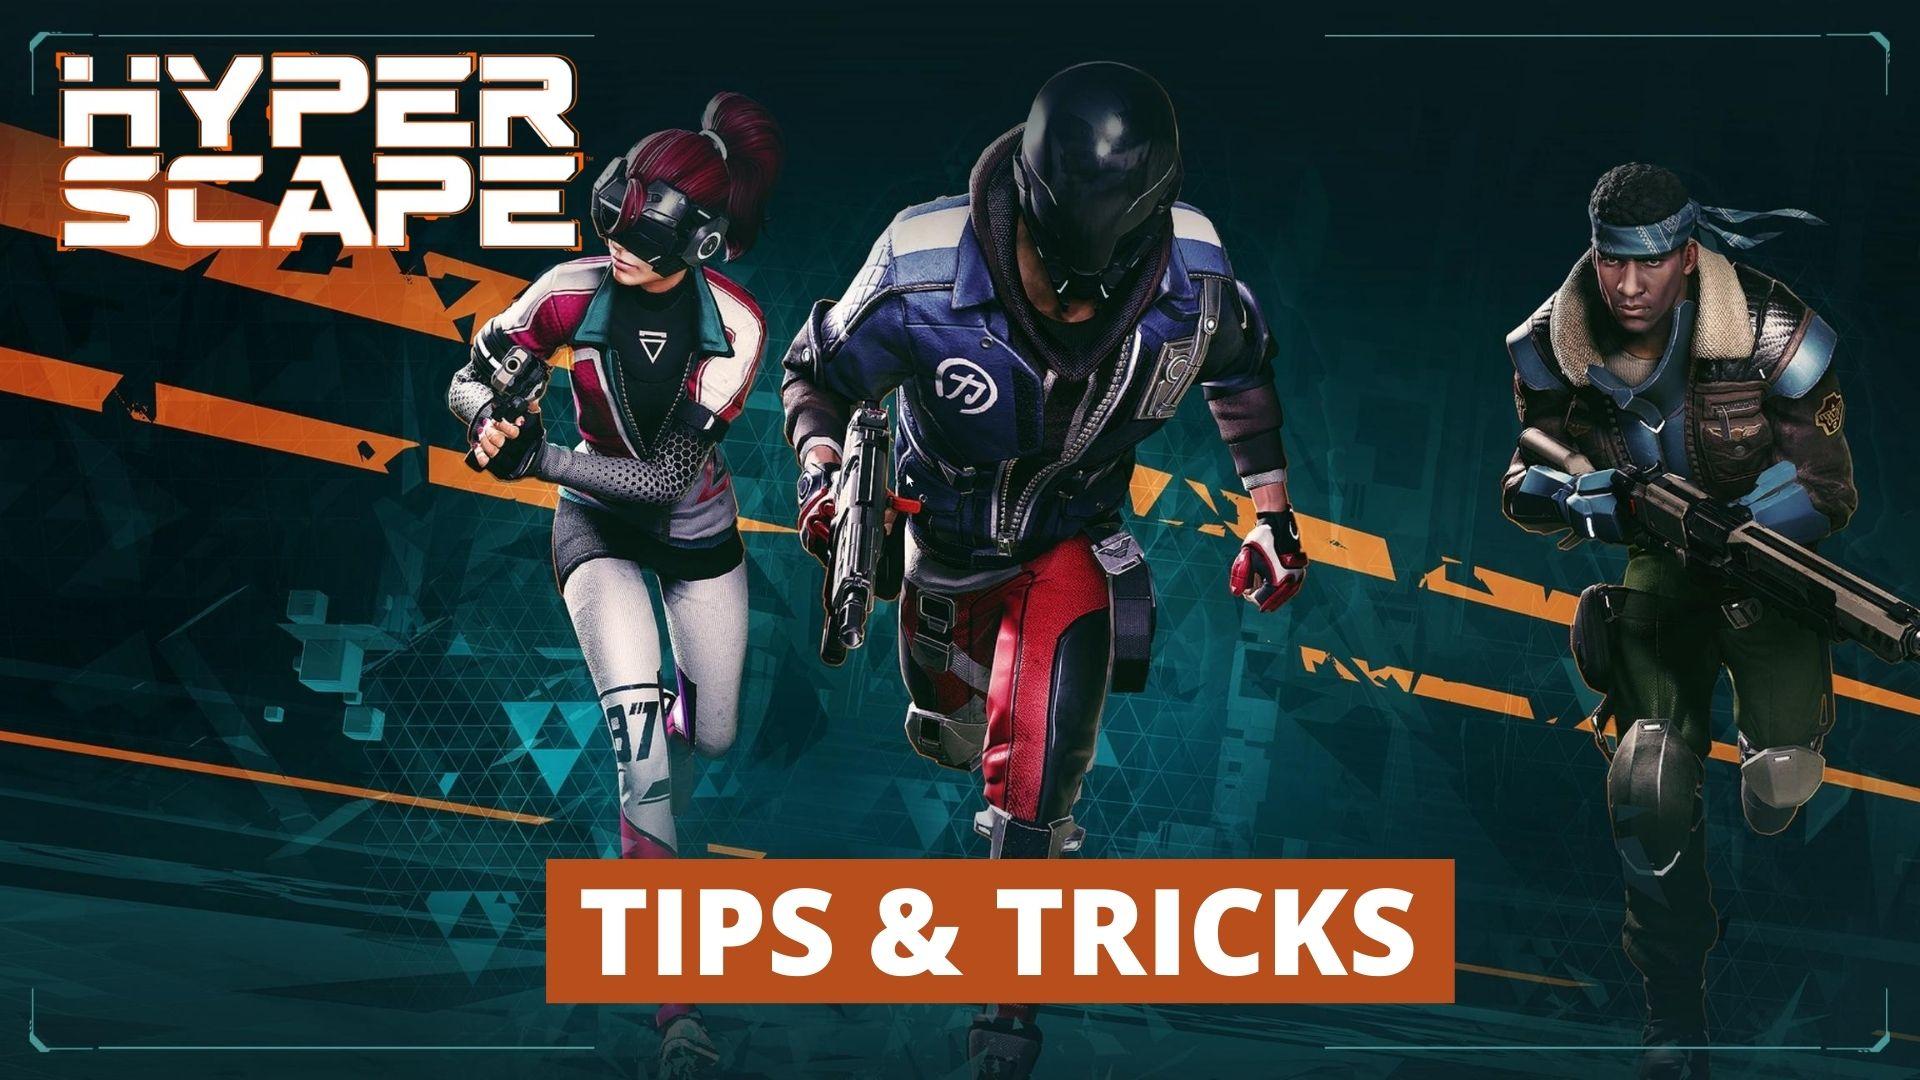 Hyper Scape tips guide